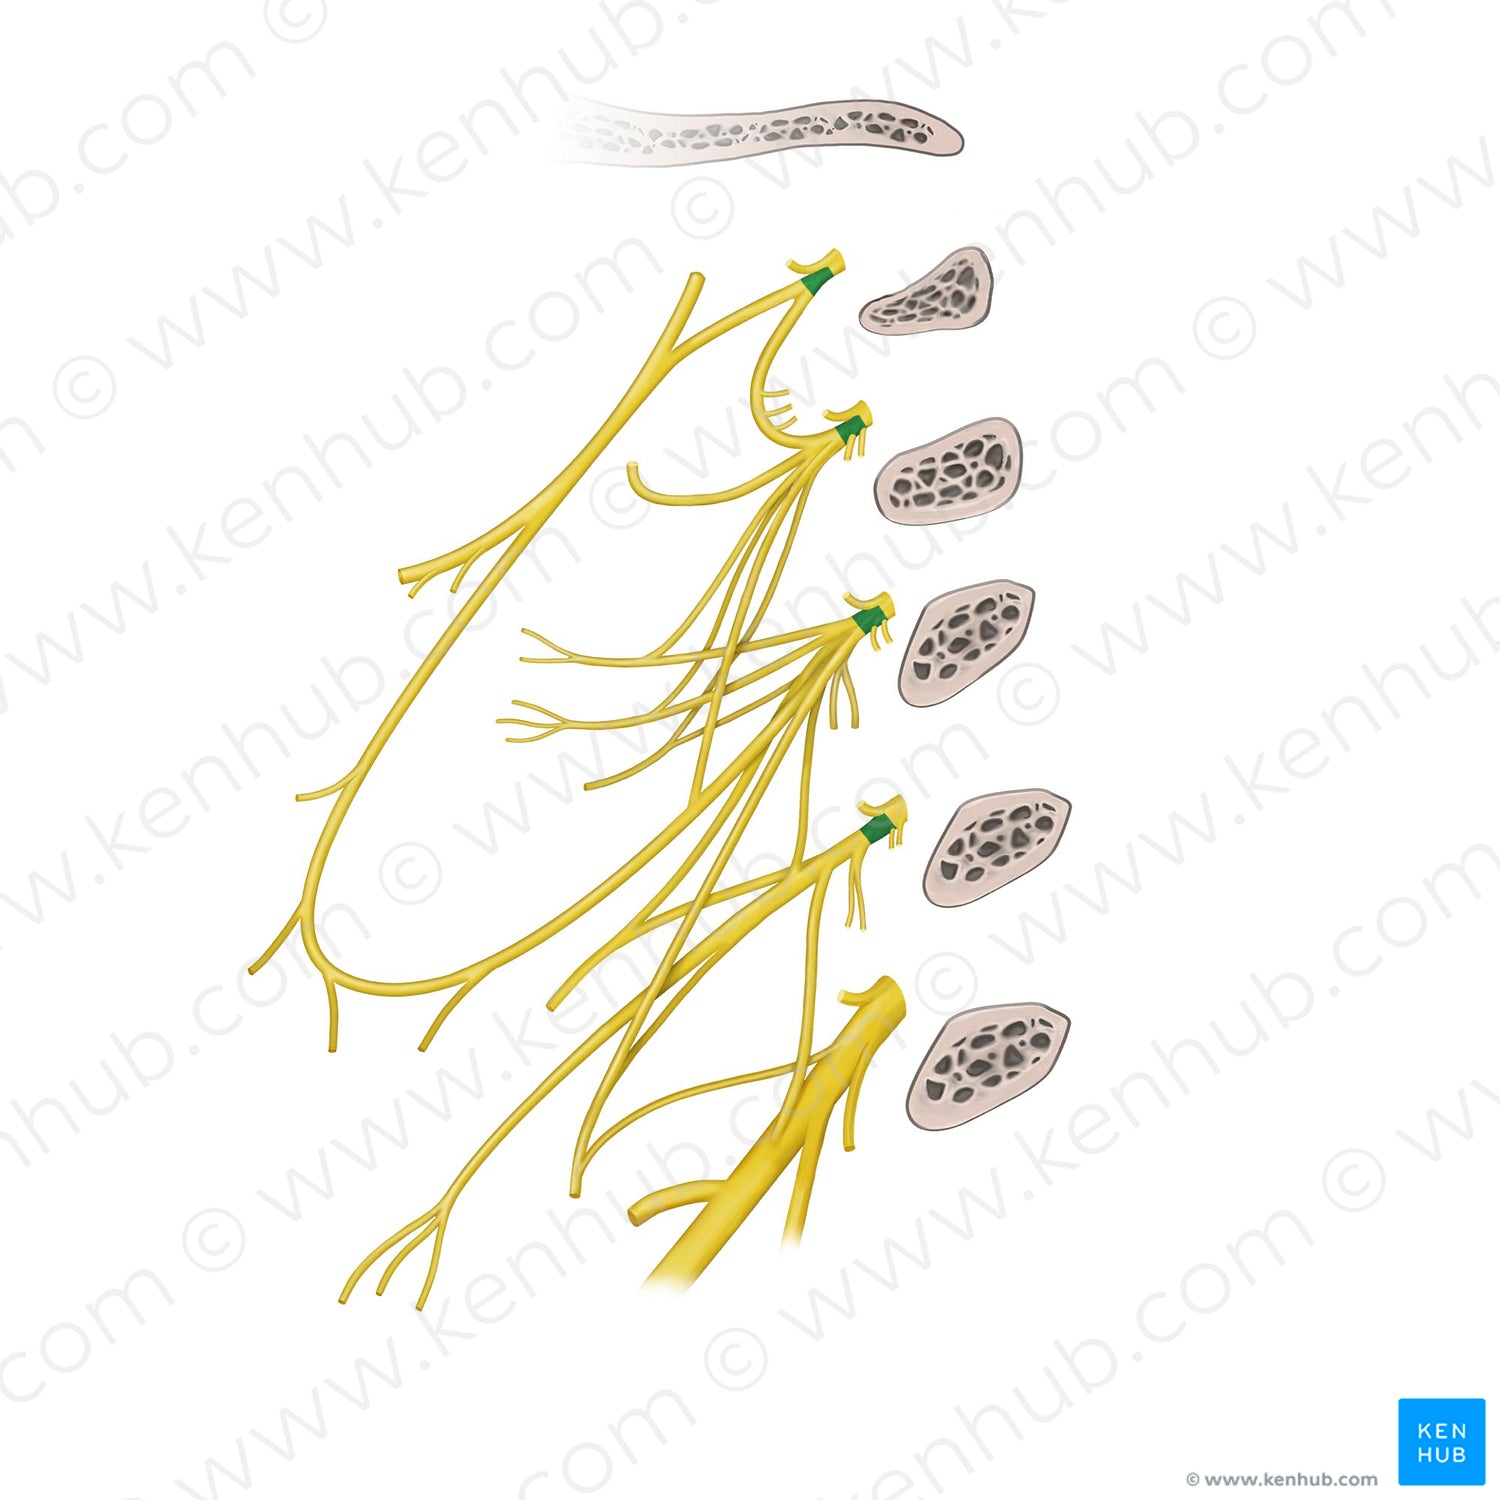 Anterior rami of spinal nerves C1-C4 (#20595)